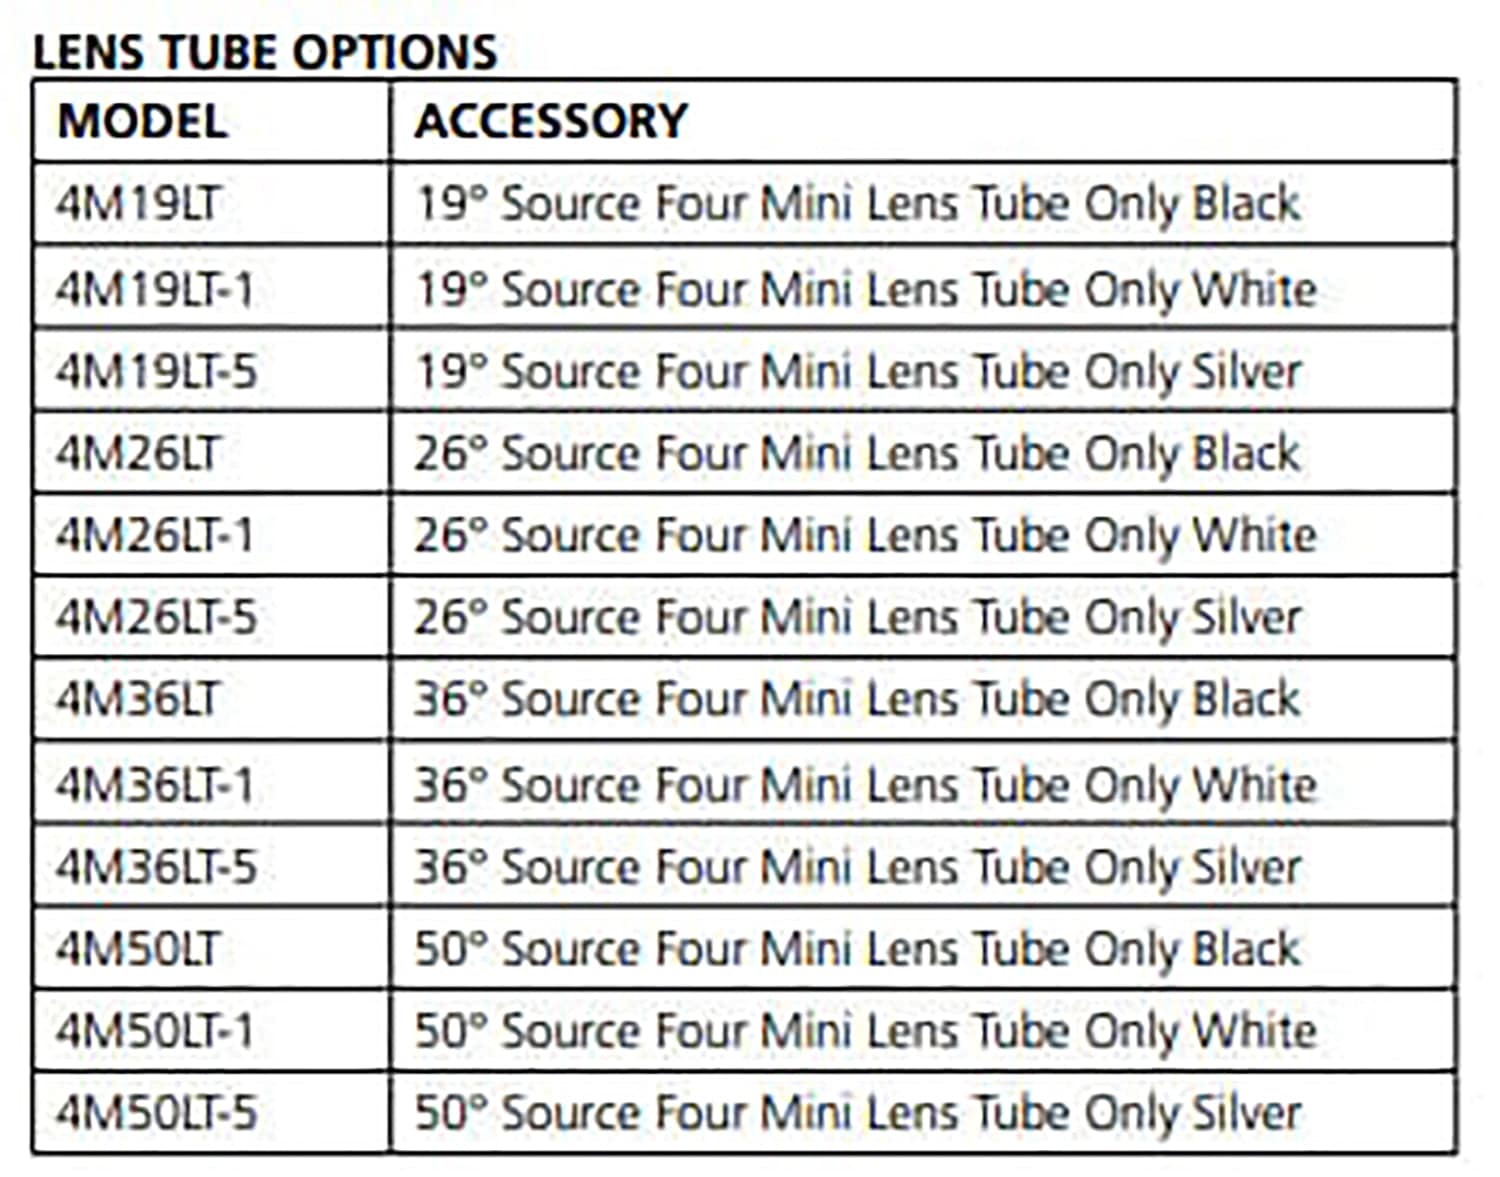 ETC Source Four Mini Gallery LED Ellipsoidal 3000 K, 50-Degree Lens Tube with Edison Plug - Black (Canopy) - PSSL ProSound and Stage Lighting